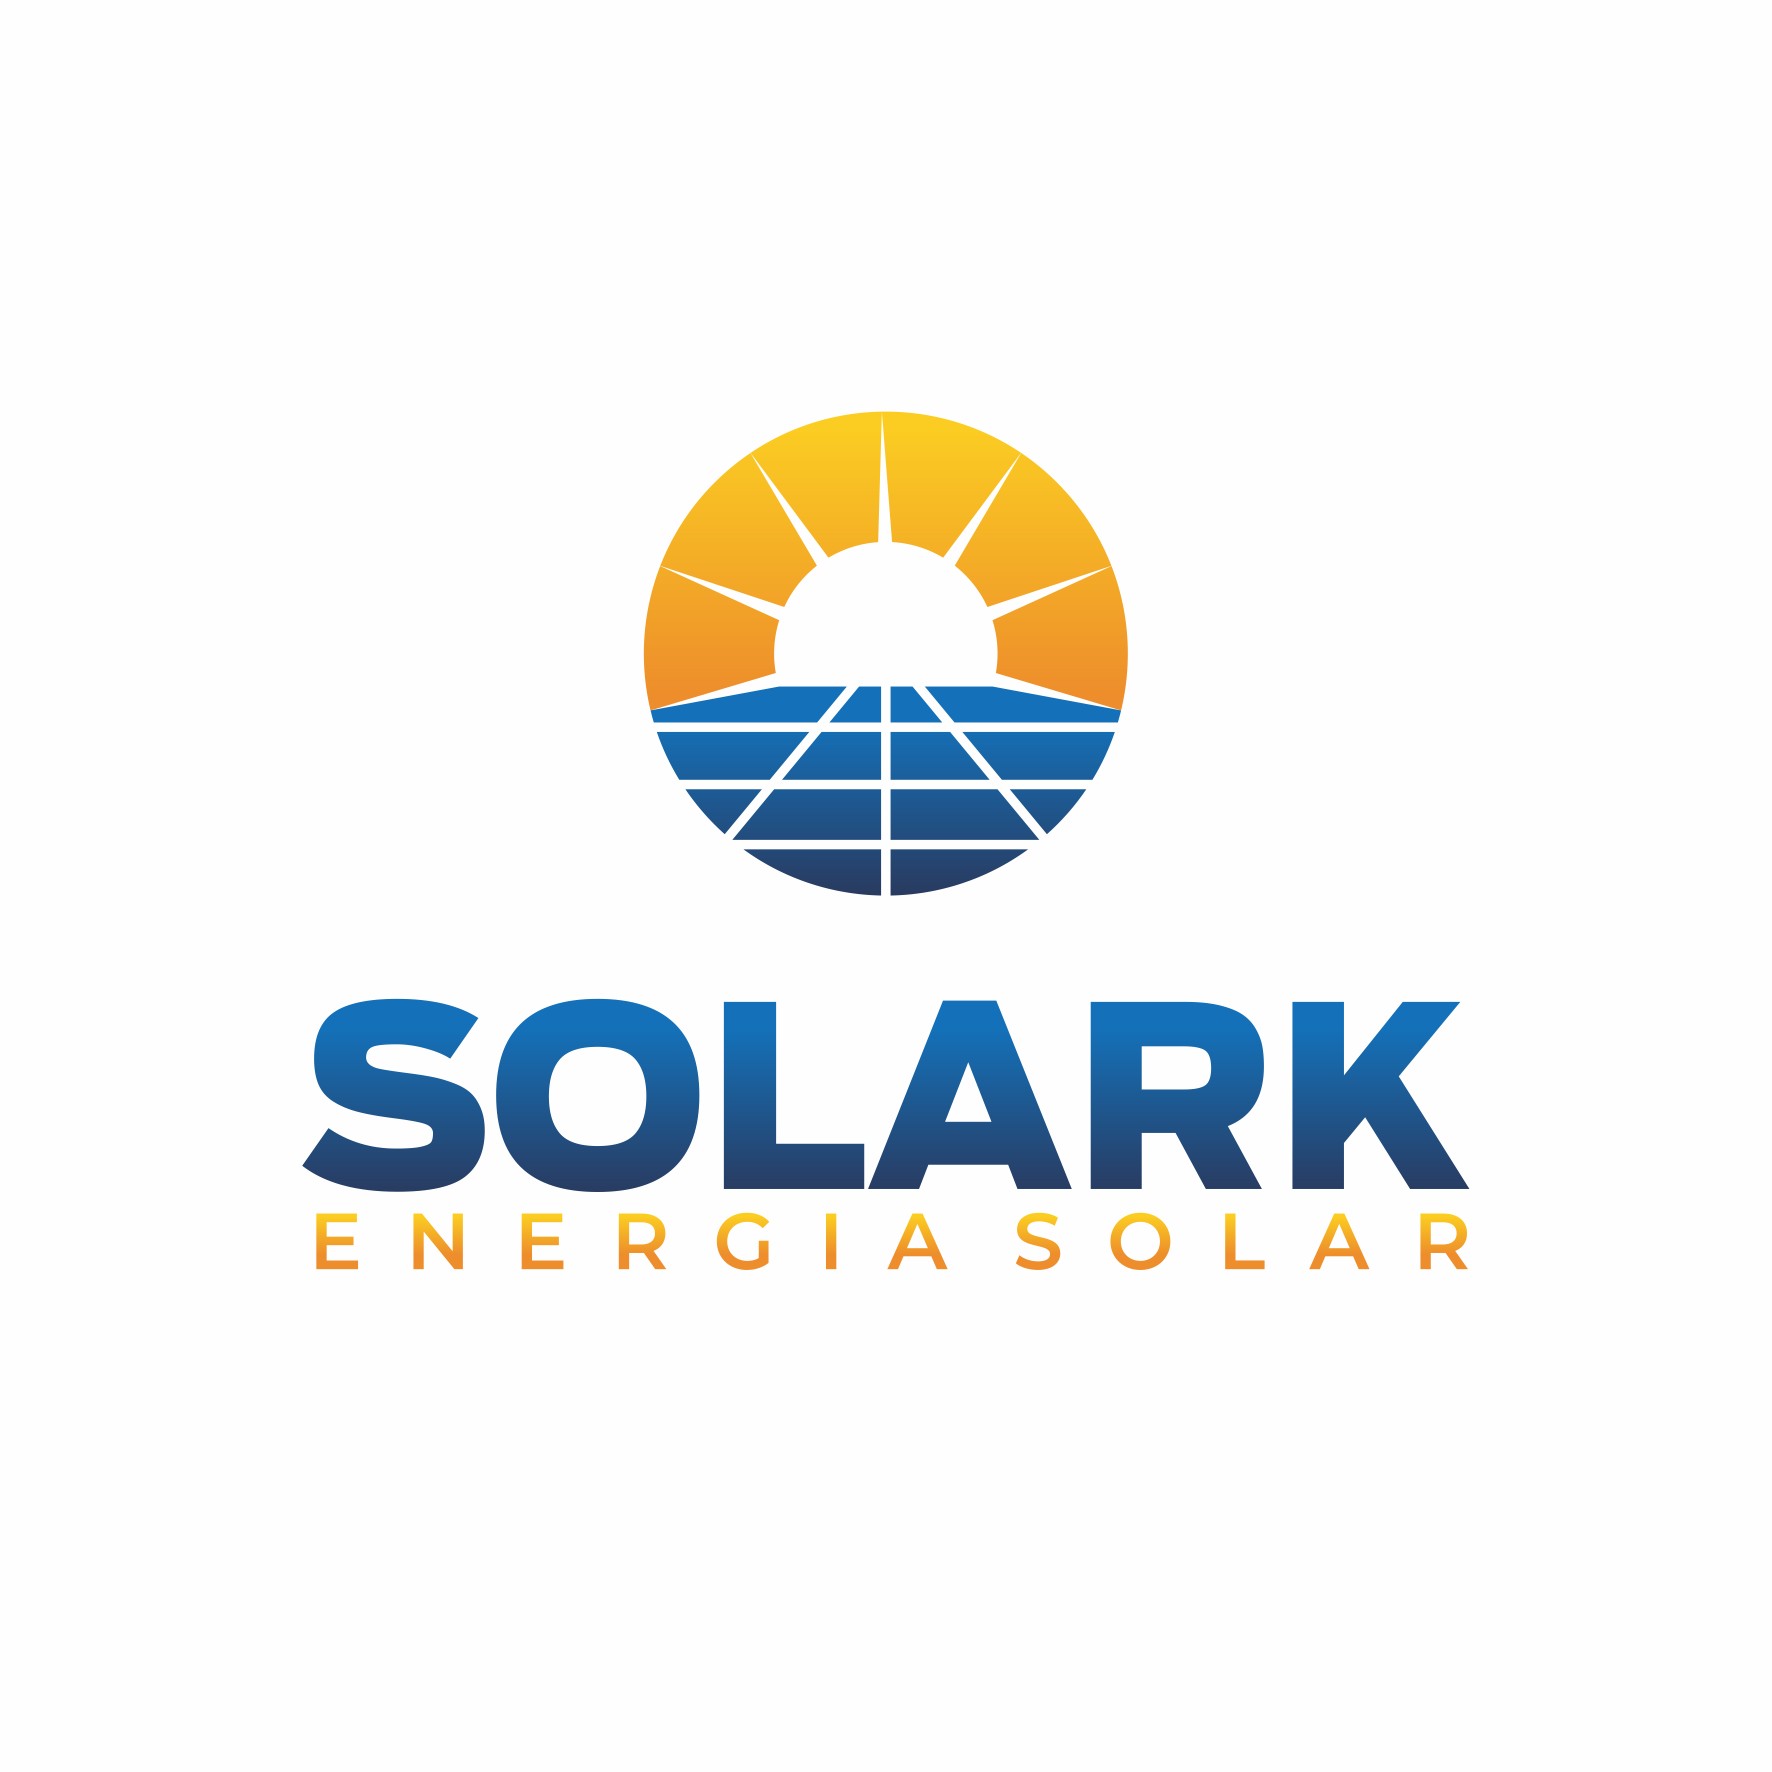 Solark